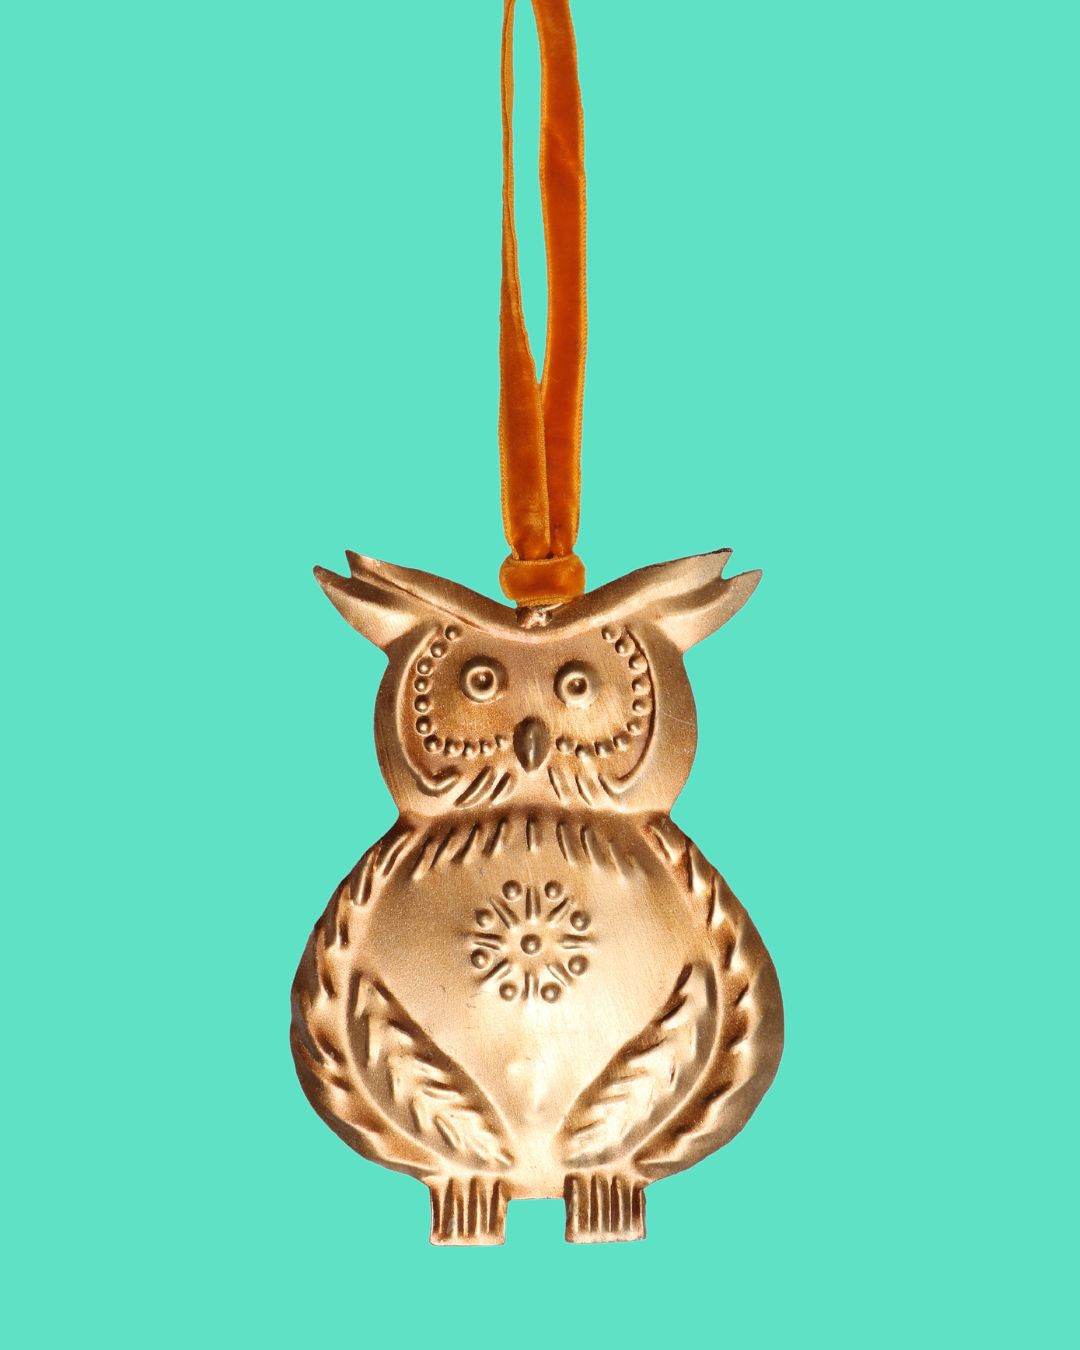 Golden Owl Pressed Decoration